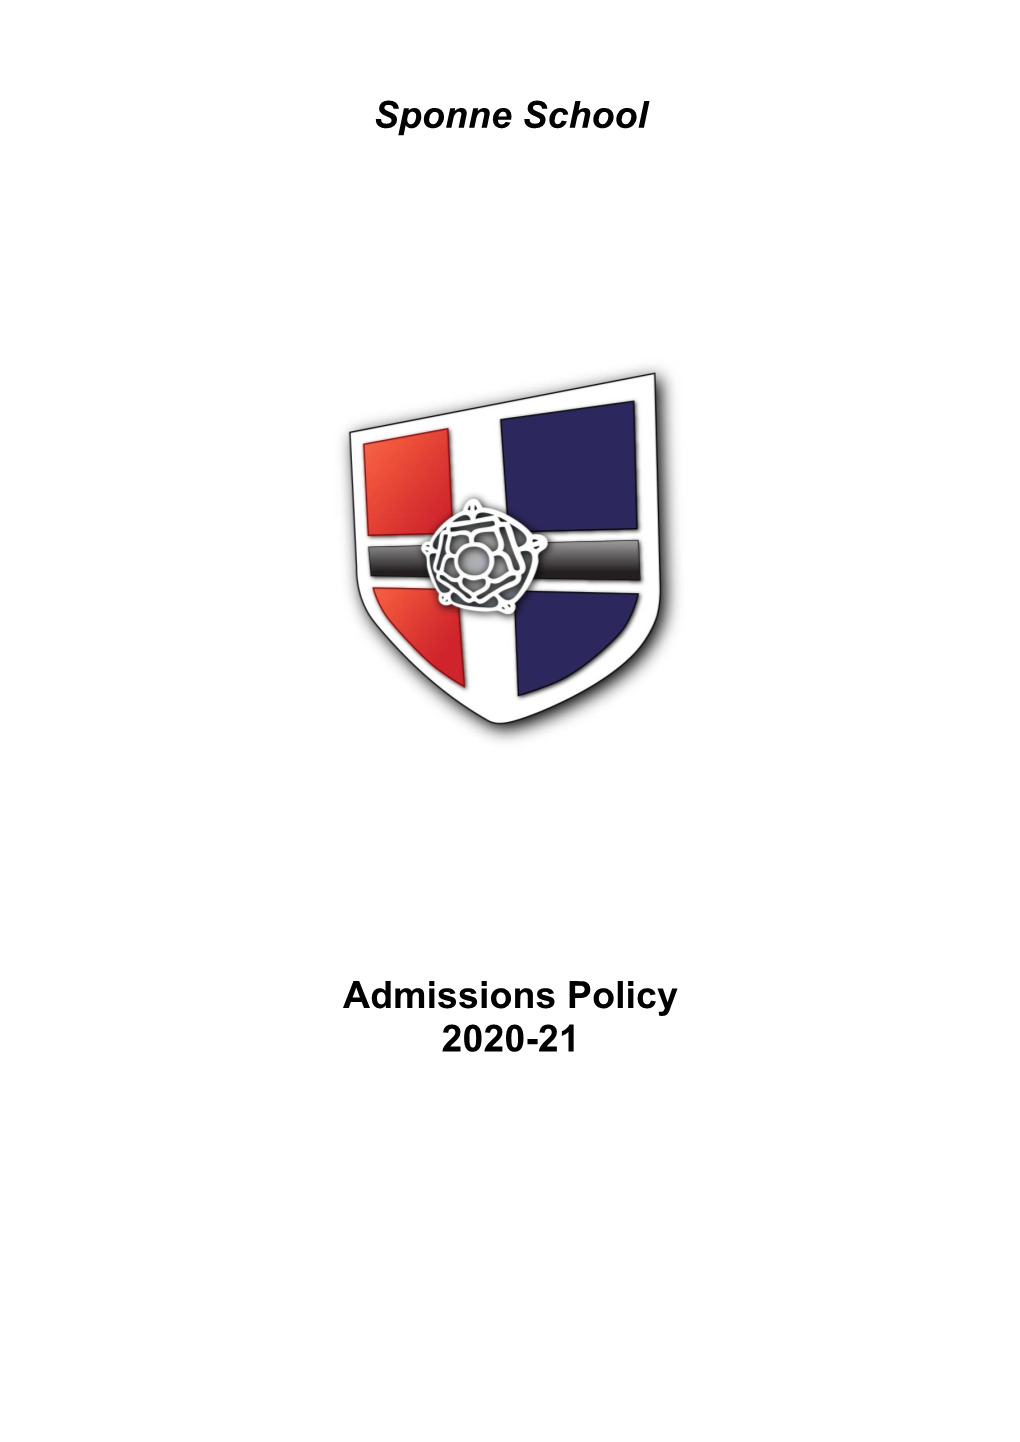 Sponne School Admissions Policy 2020-21